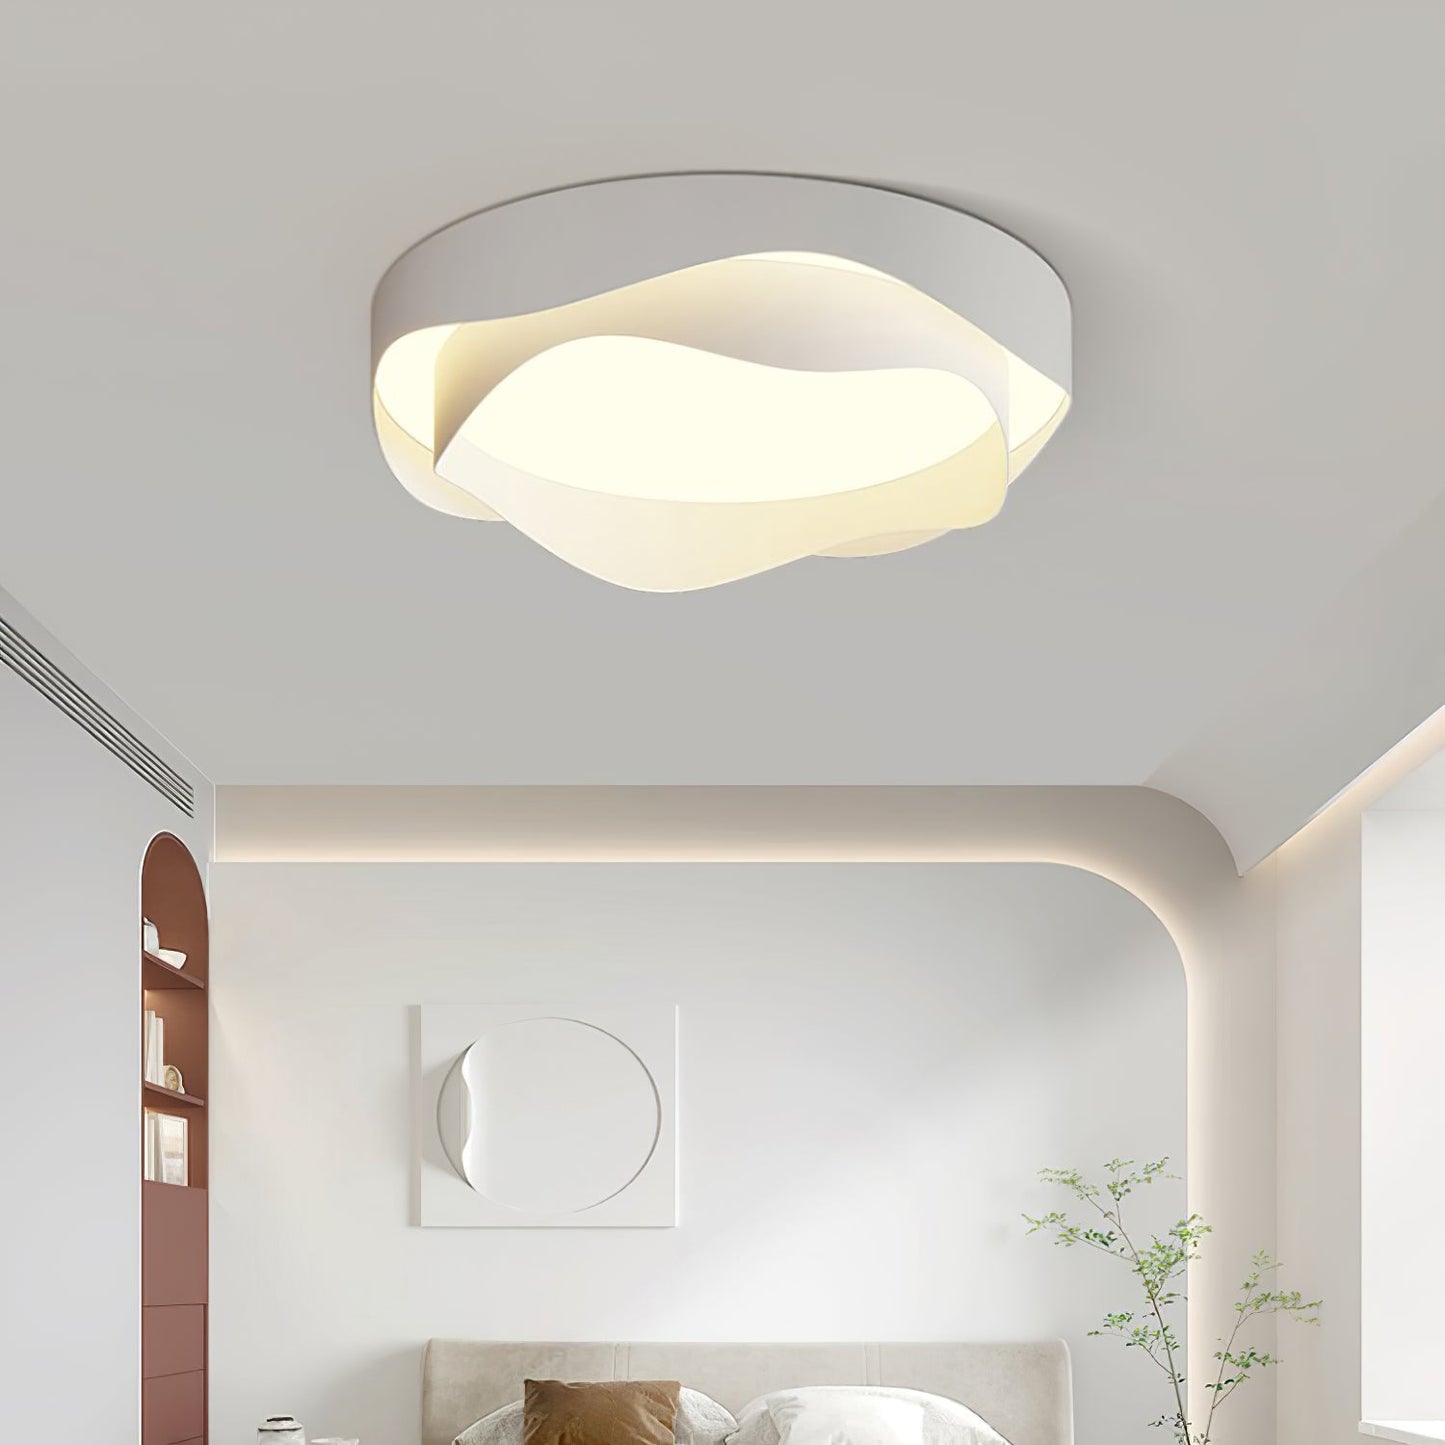 مصباح سقف LED من سينيا